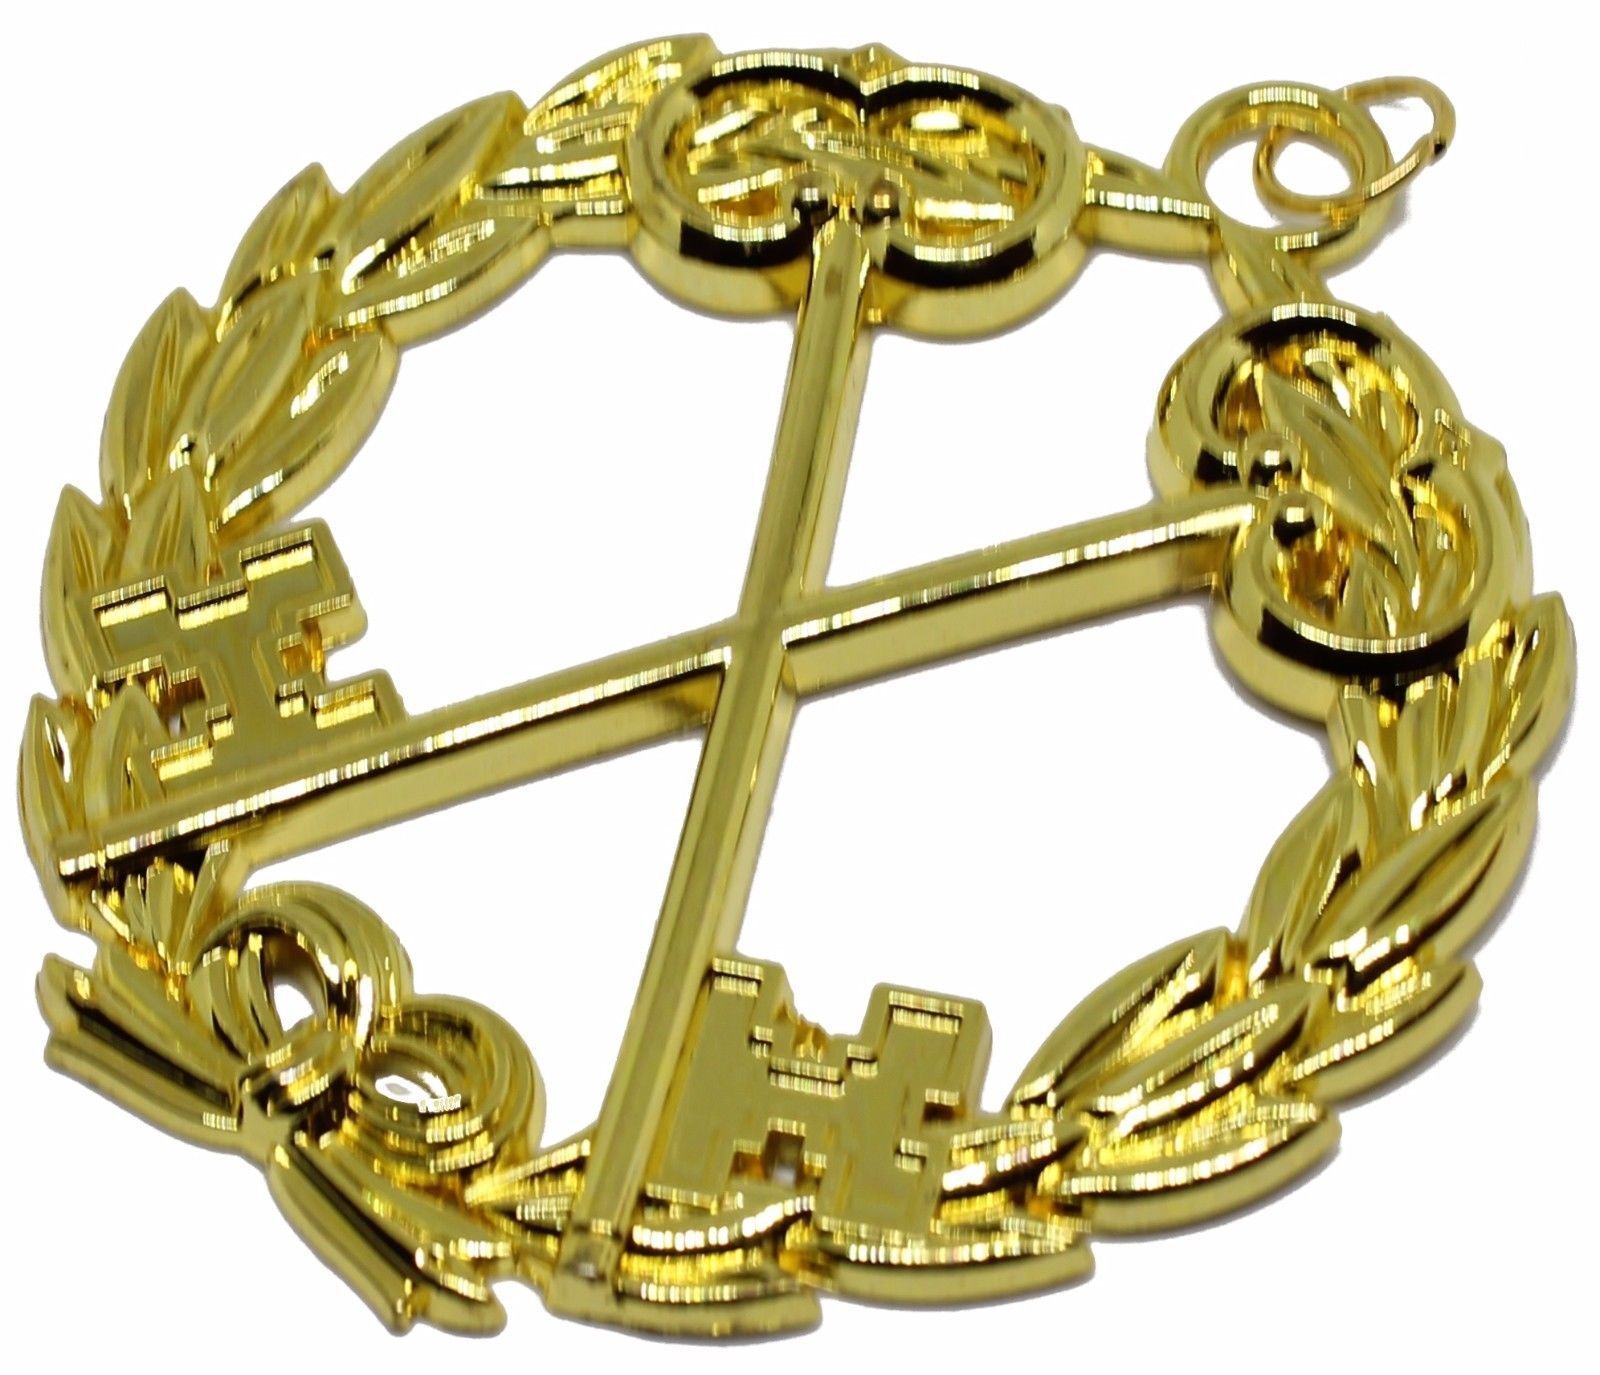 GRAND Treasurer Masonic Collar Jewel GOLD PLATED FREEMASON